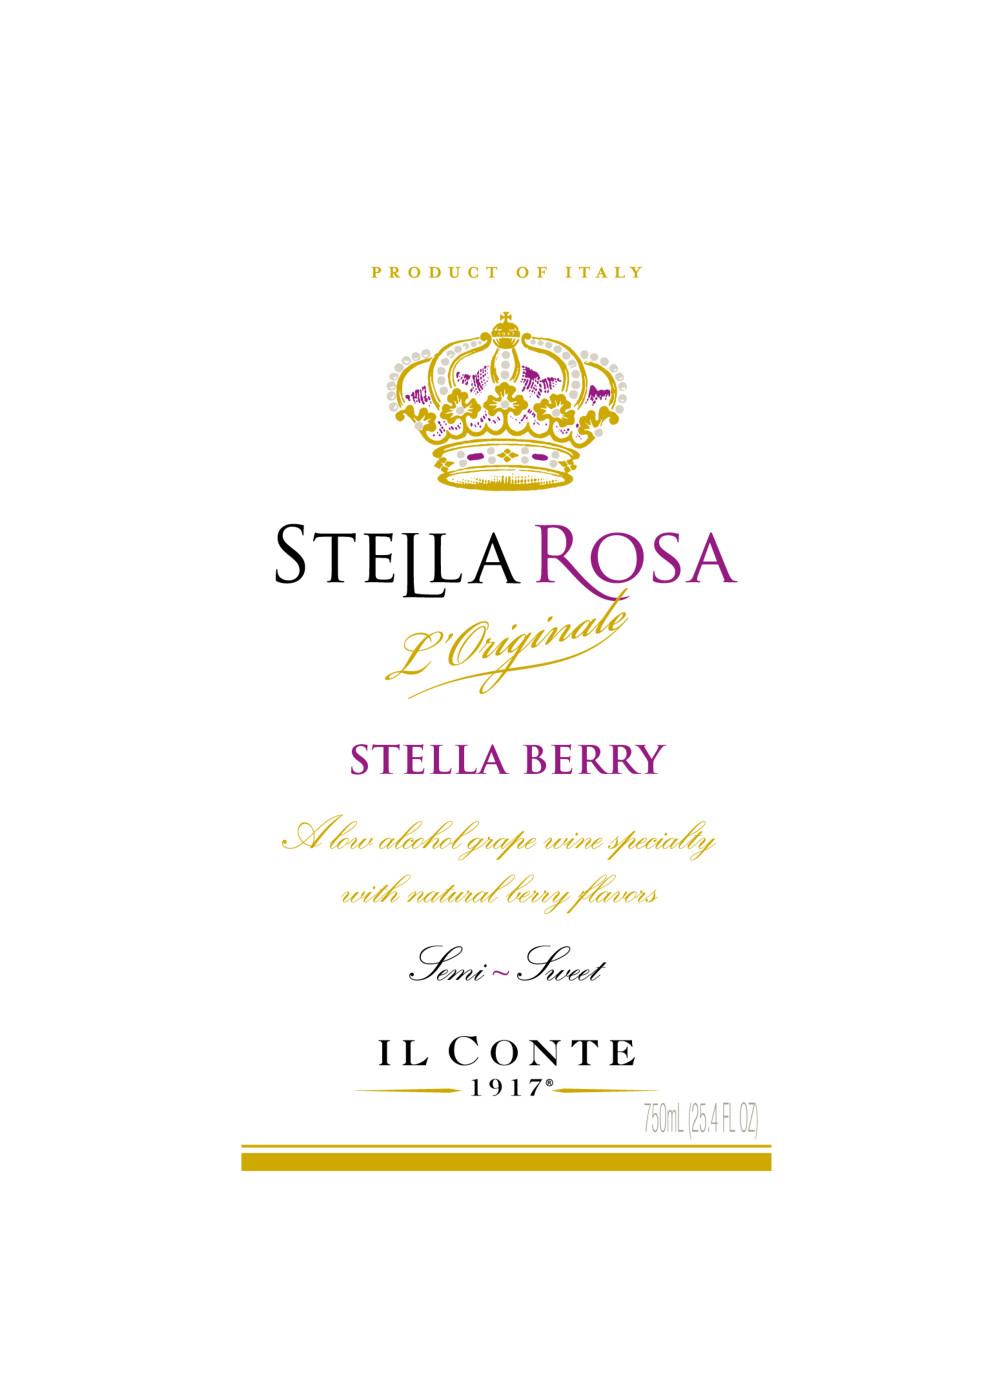 Stella Rosa Stella Berry; image 2 of 7